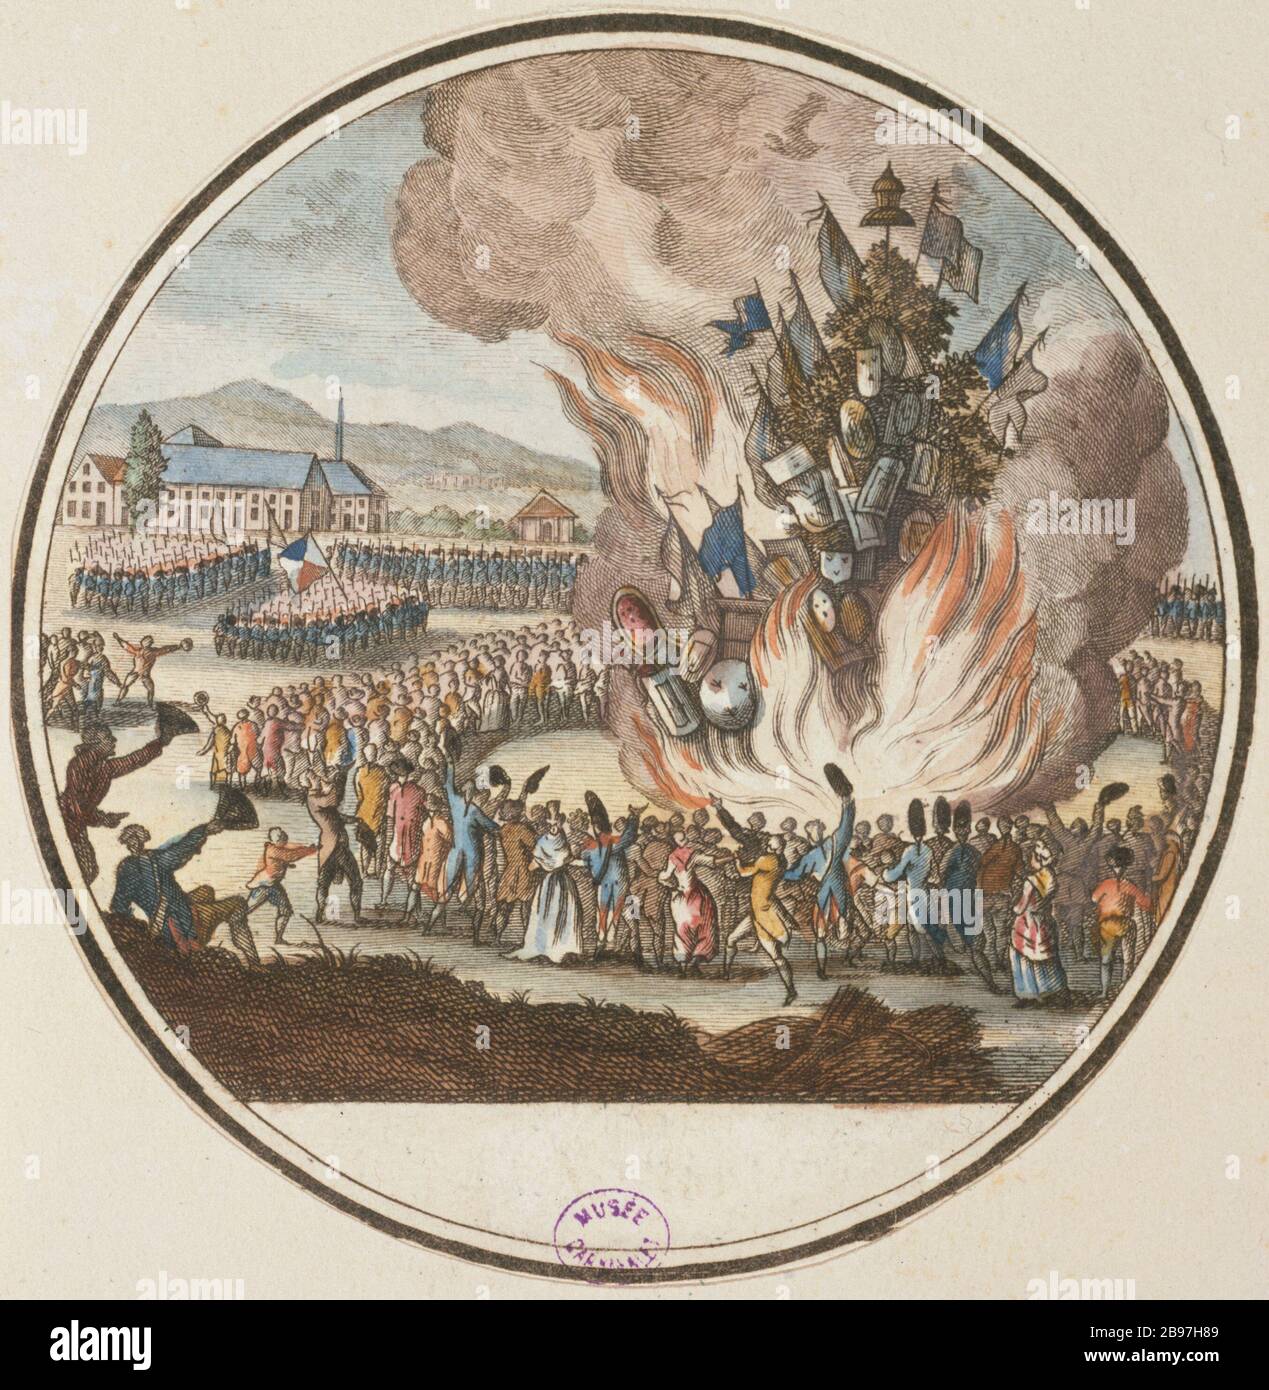 GEDENKEN AN DIE EINNAHME DER BASTILLE 'Commémoration de la Pry de la Bastille (14 Juillet, 173)'. Paris, musée Carnavalet. Stockfoto